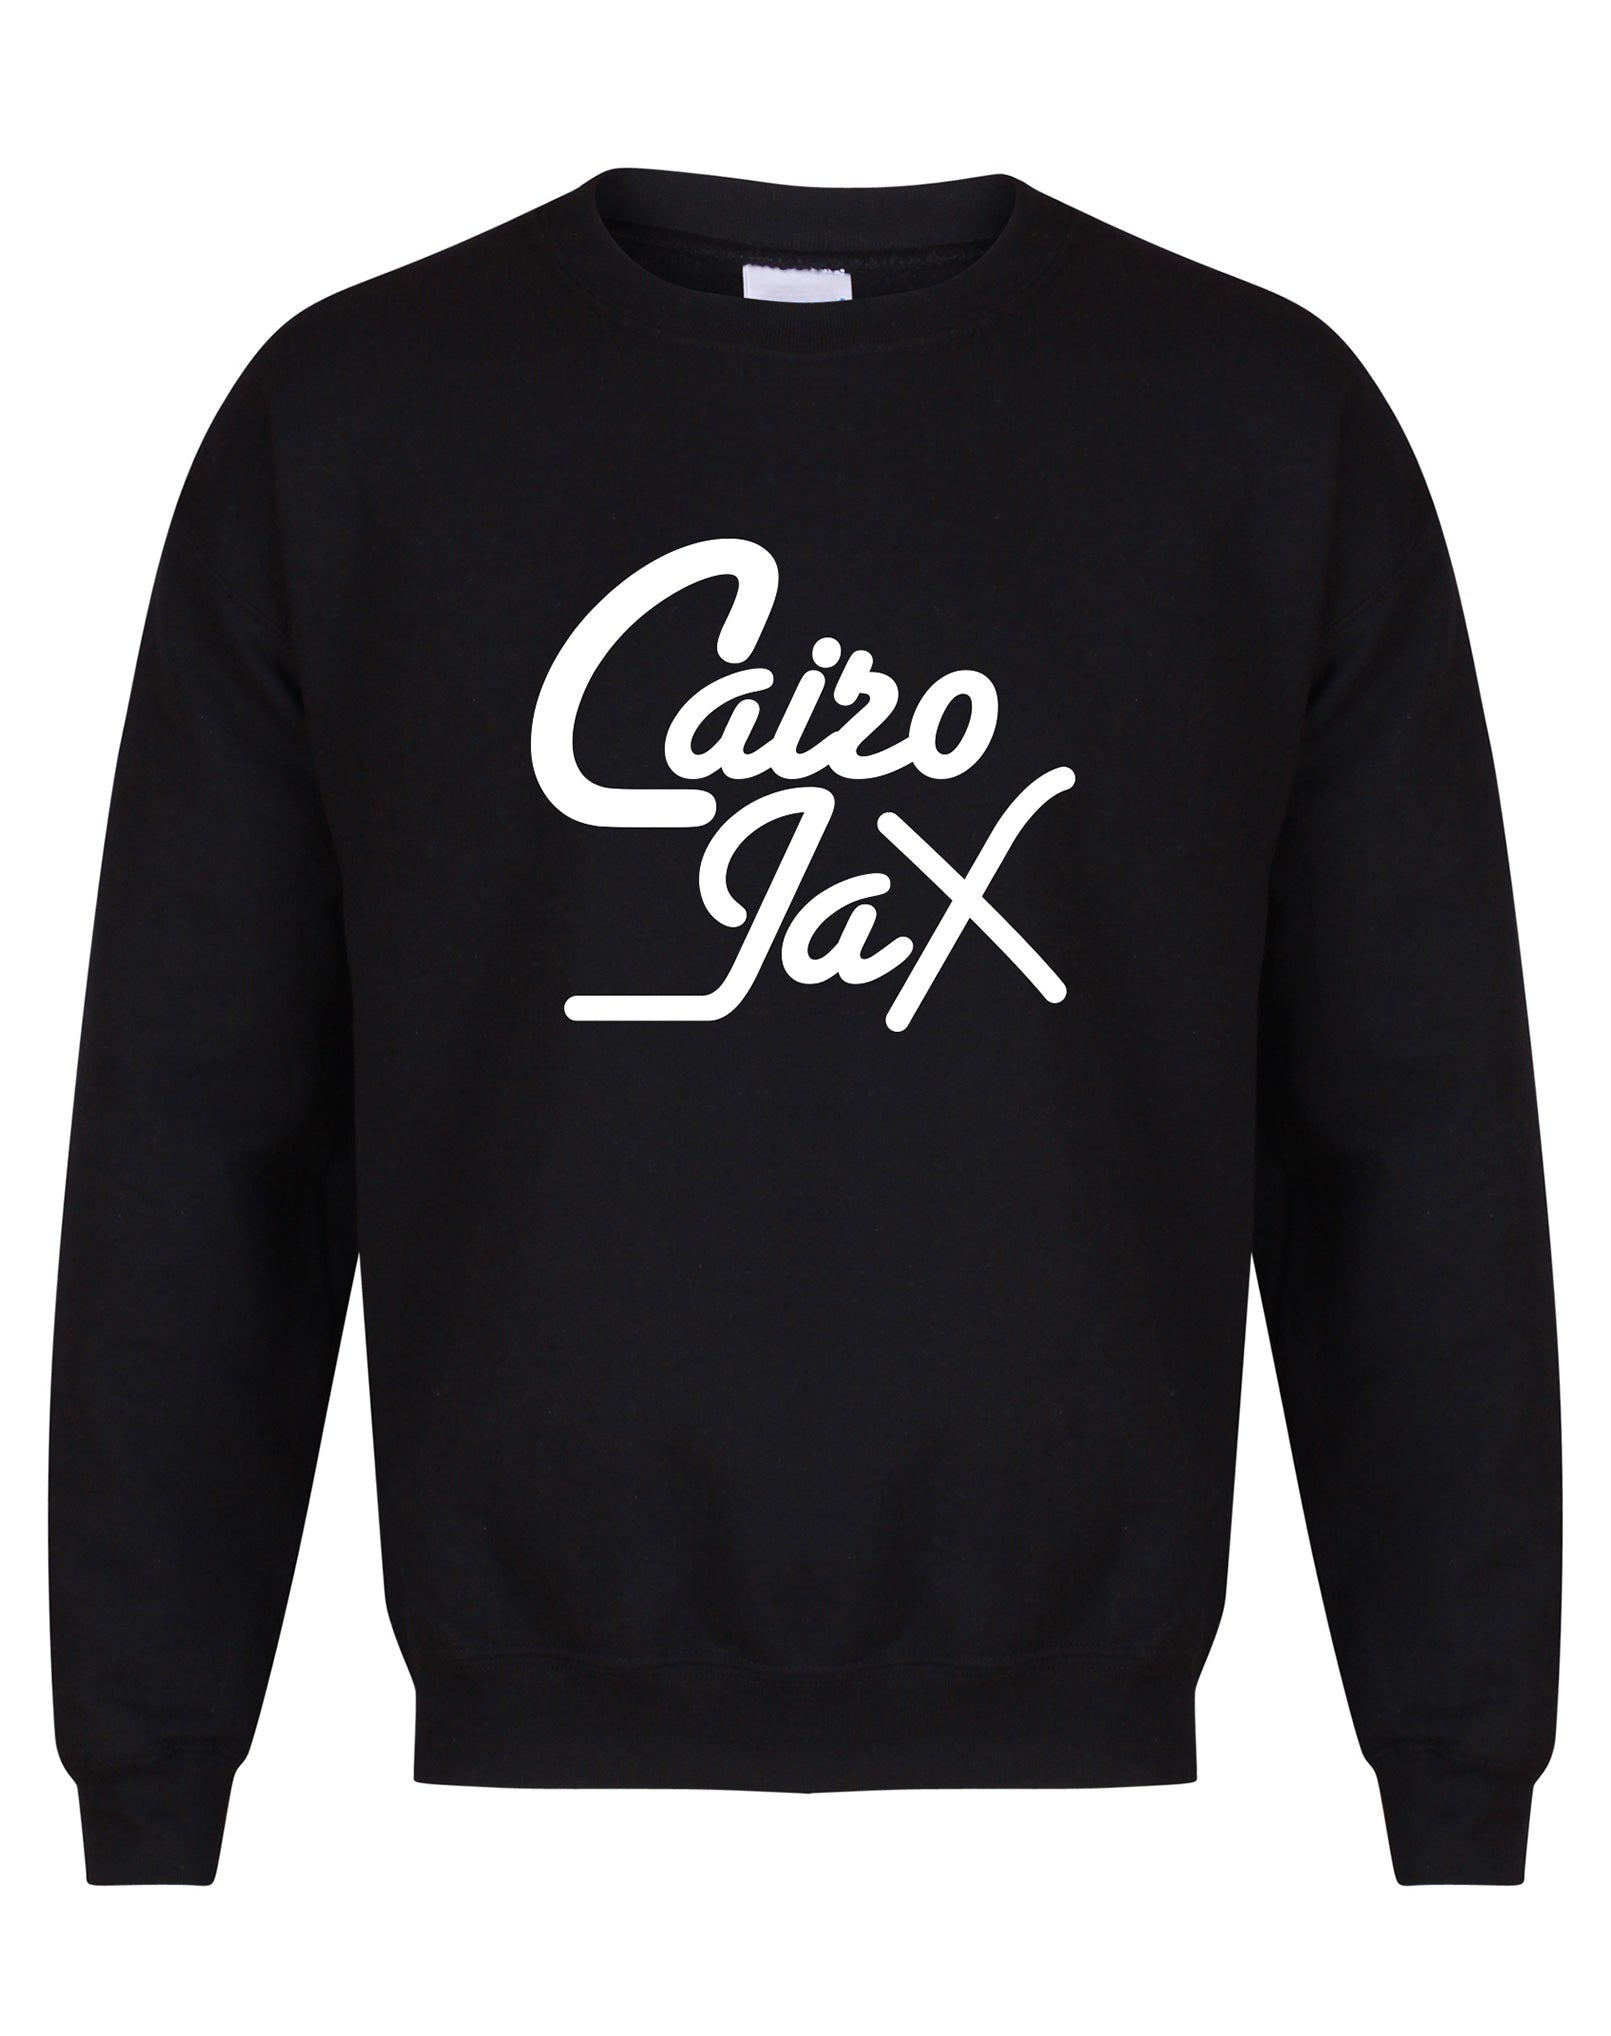 Cairo Jax unisex fit sweatshirt - various colours - Dirty Stop Outs